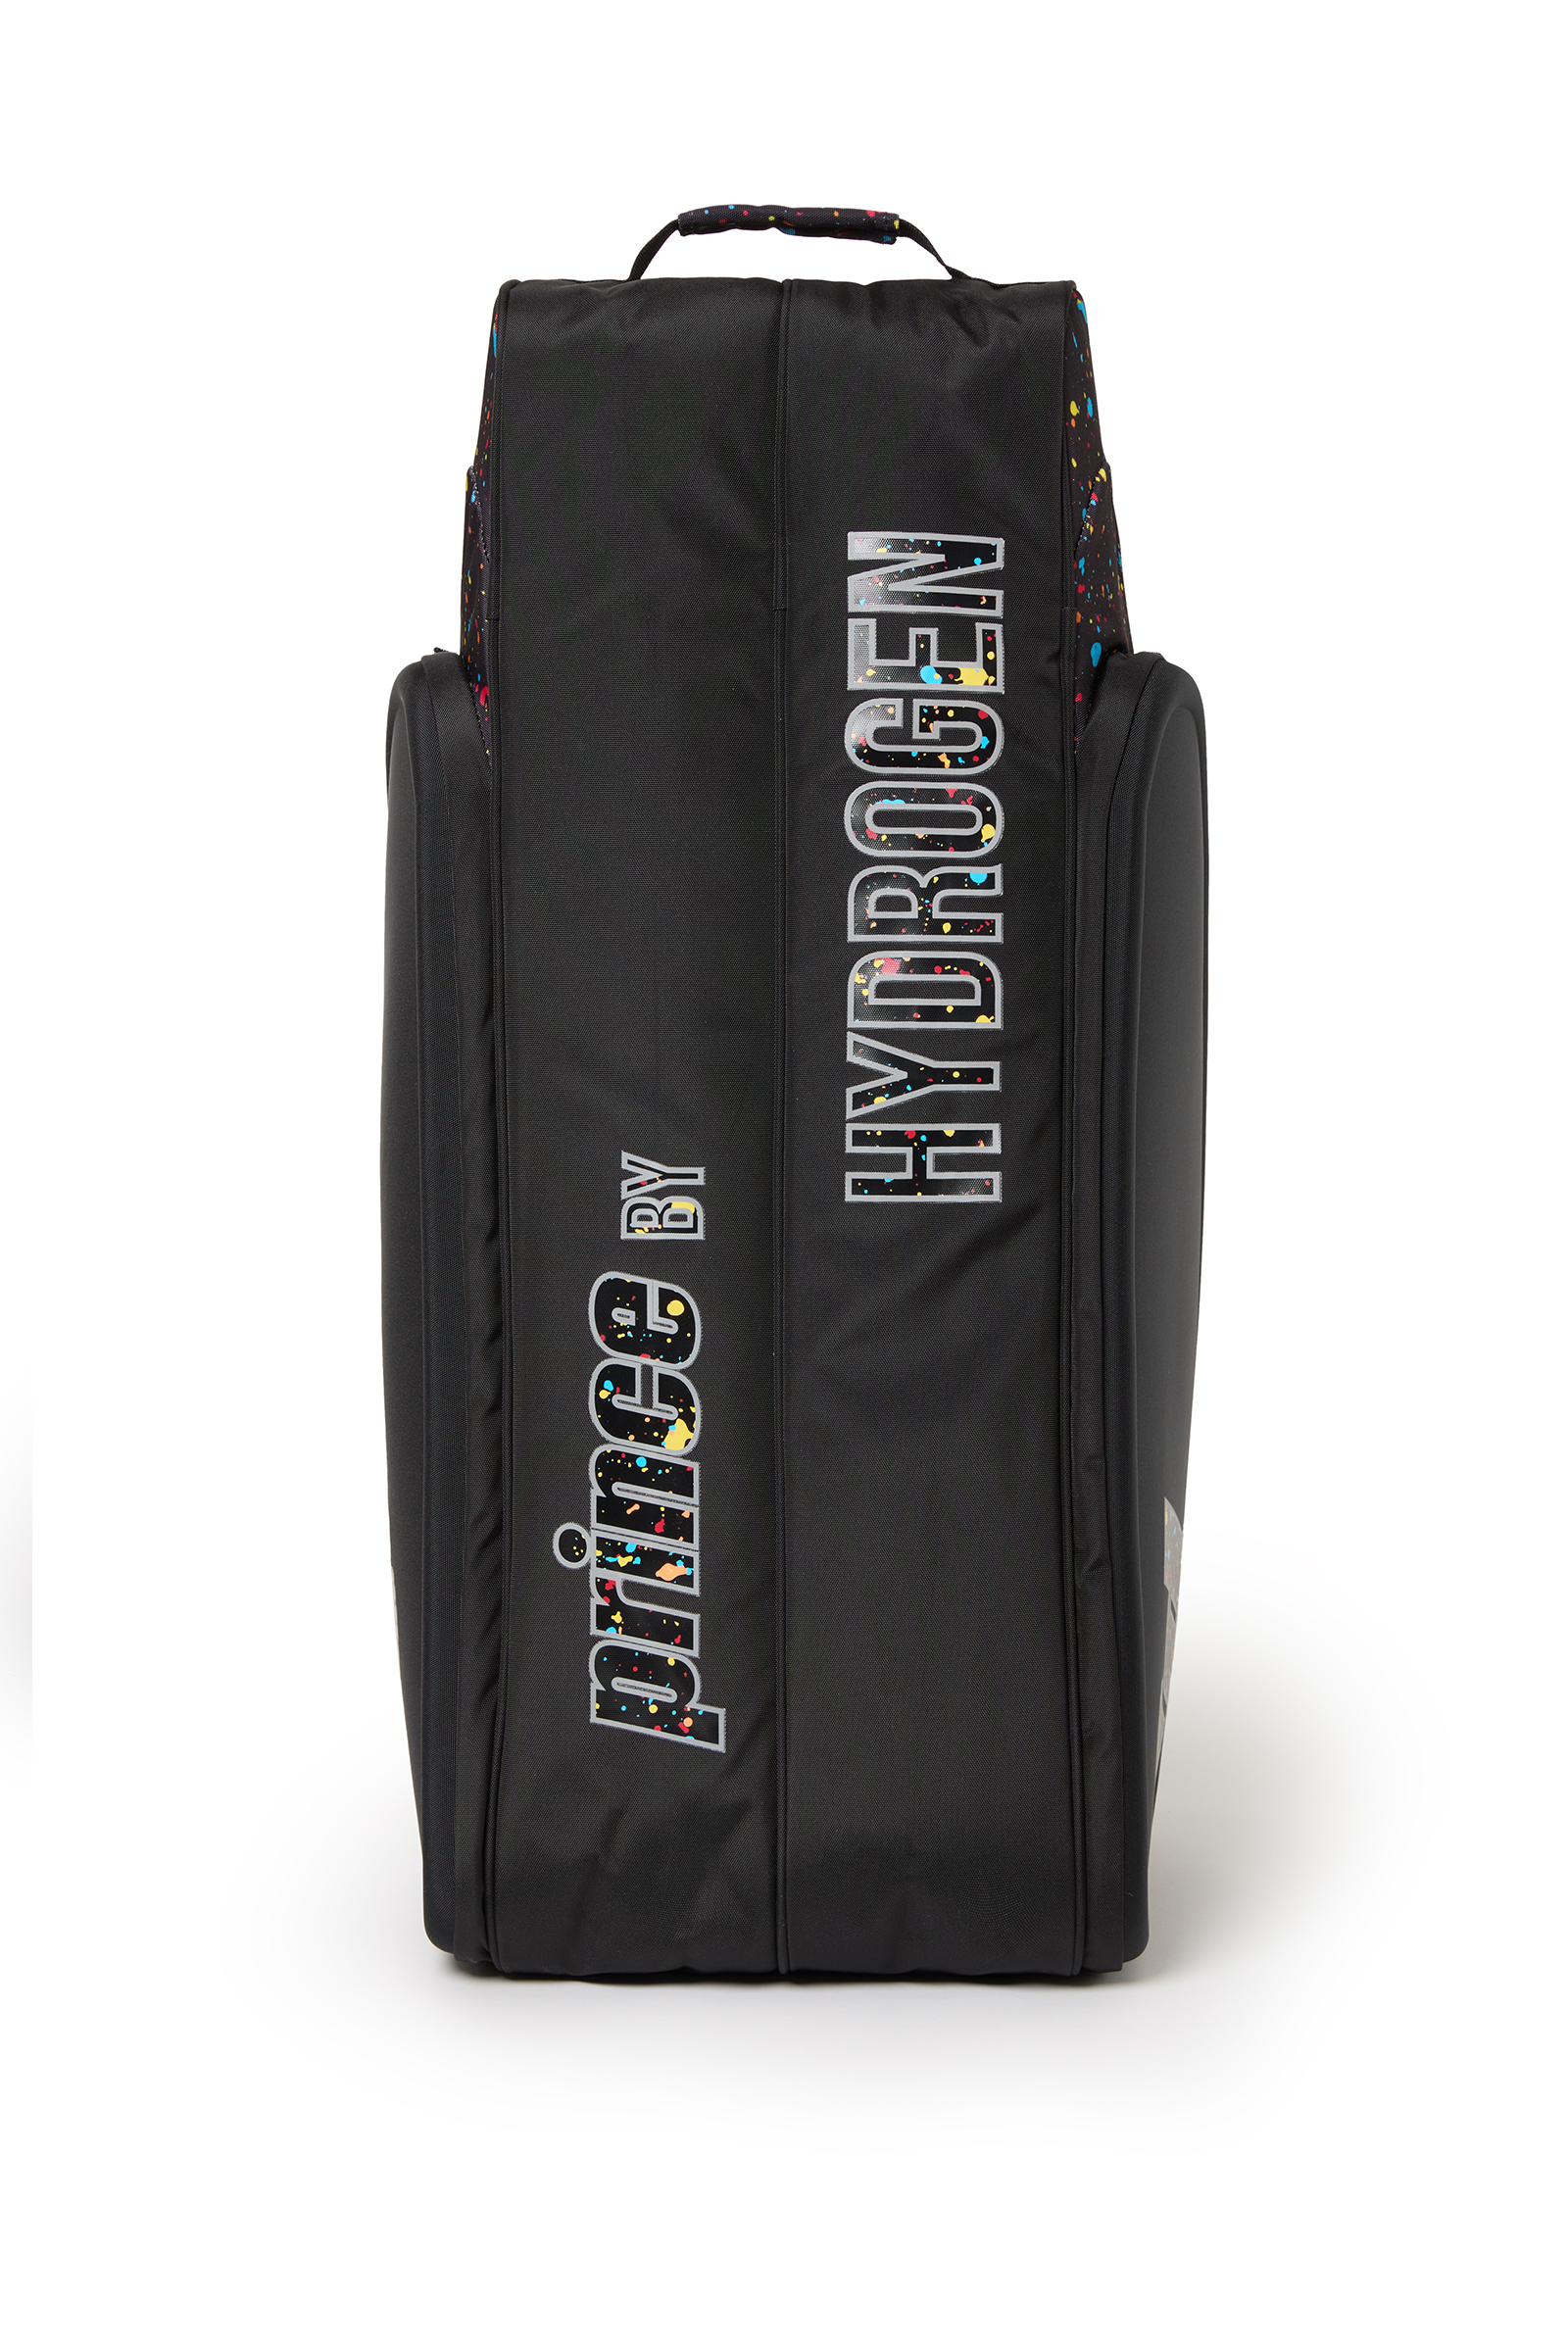 SPARK RACKETS BAG BIG PRINCE BY HYDROGEN - BLACK - Hydrogen - Luxury Sportwear